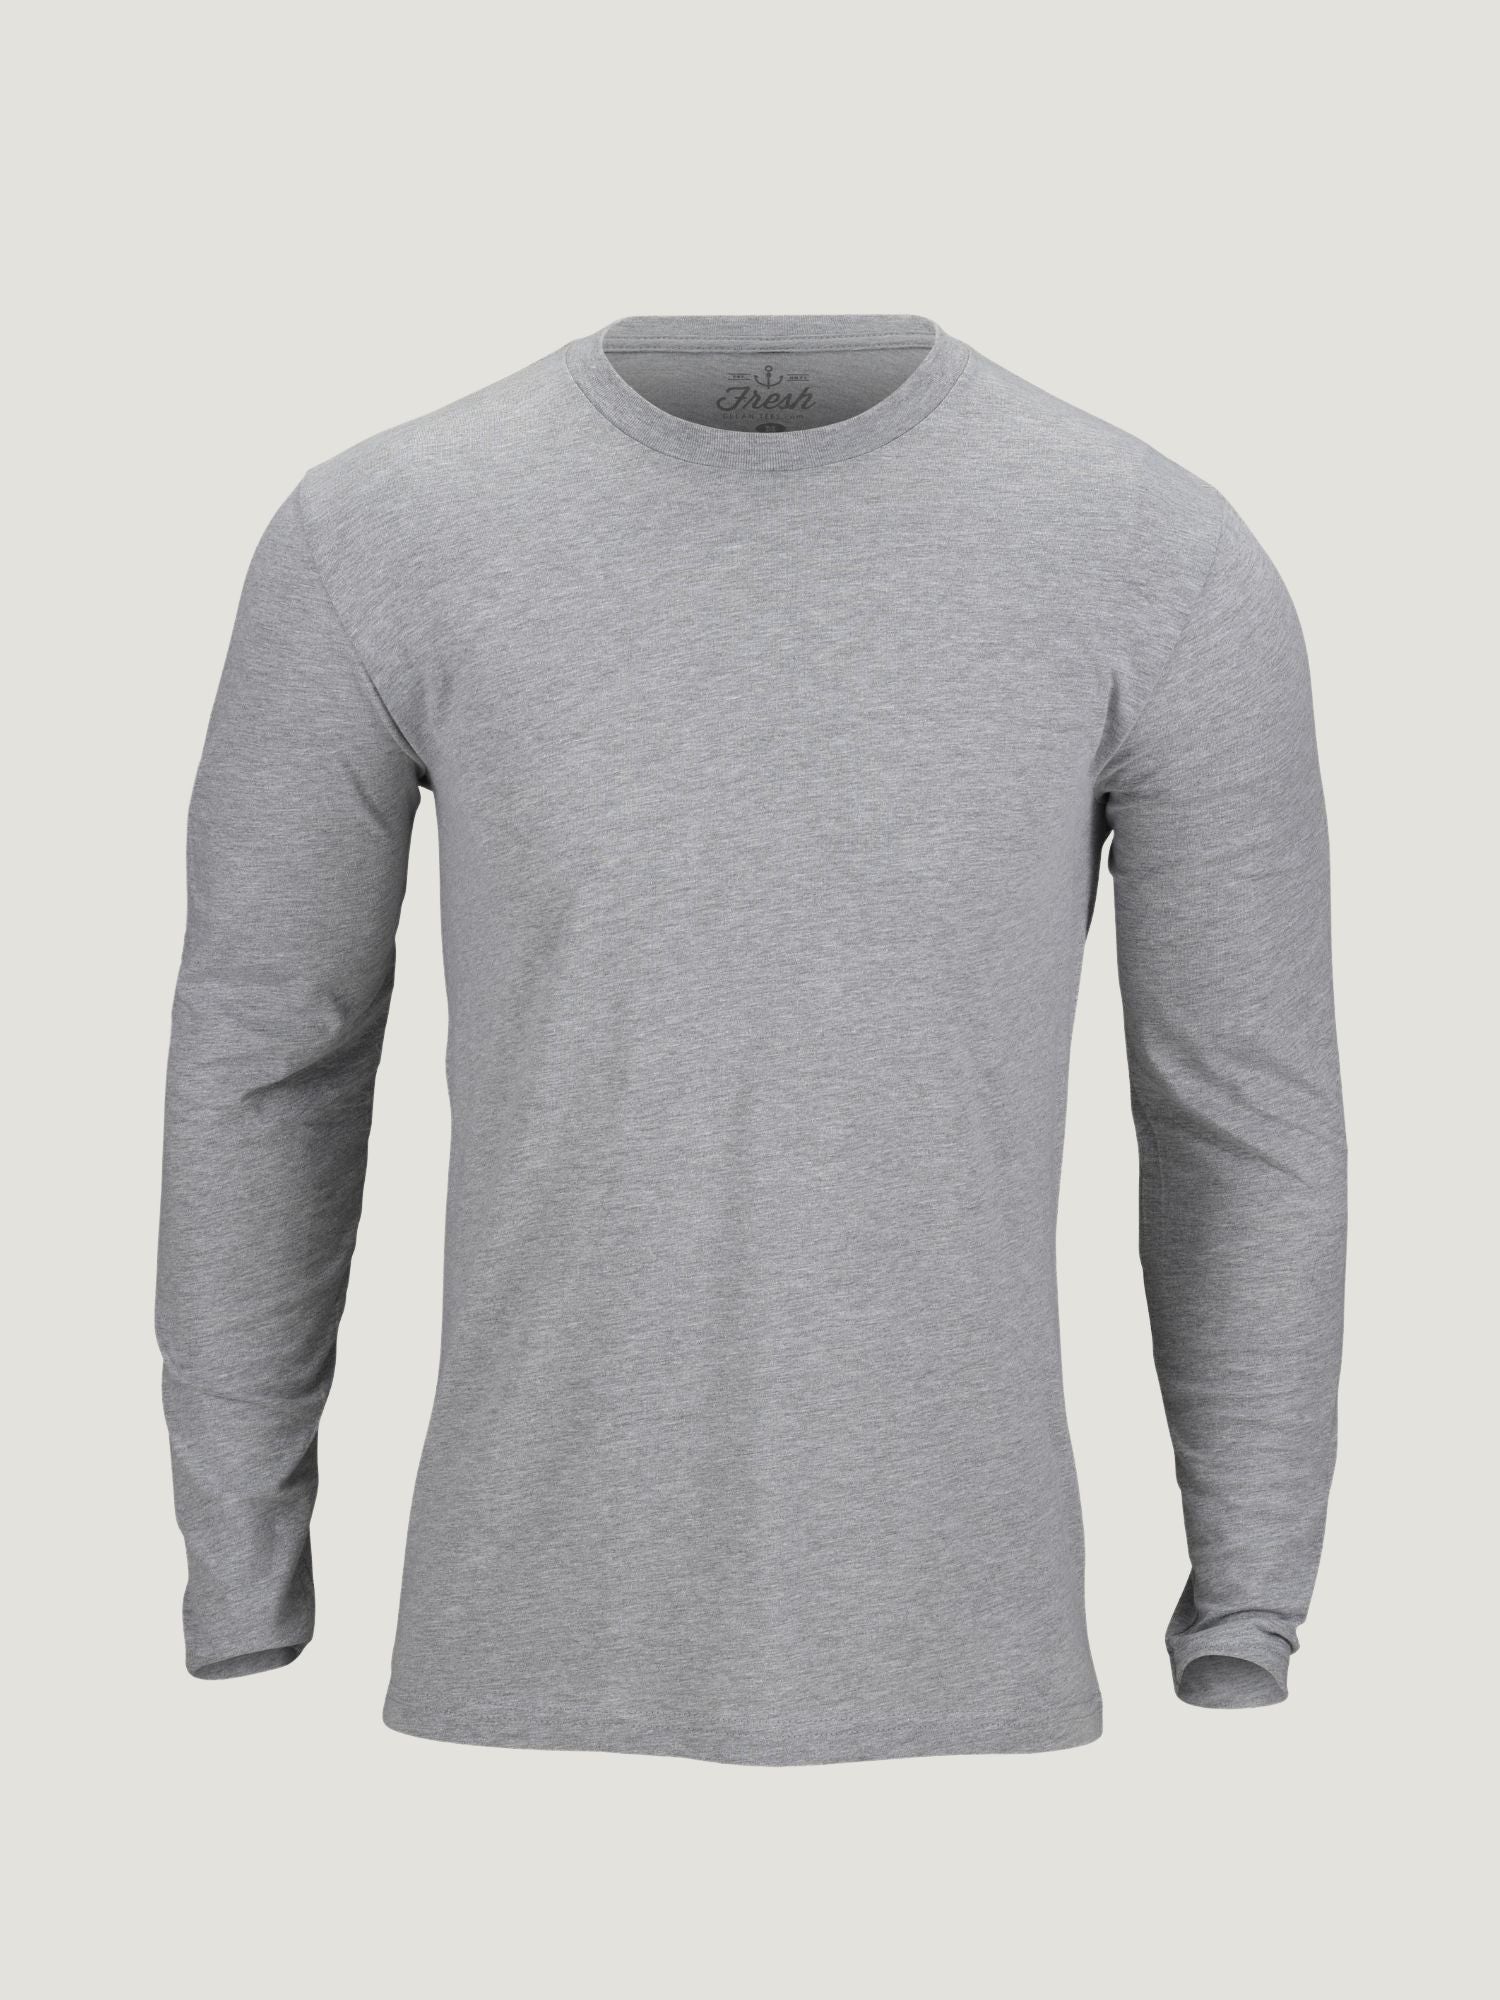 Klassy Network Crew Neck Long Sleeve Shirt, Medium, Grey